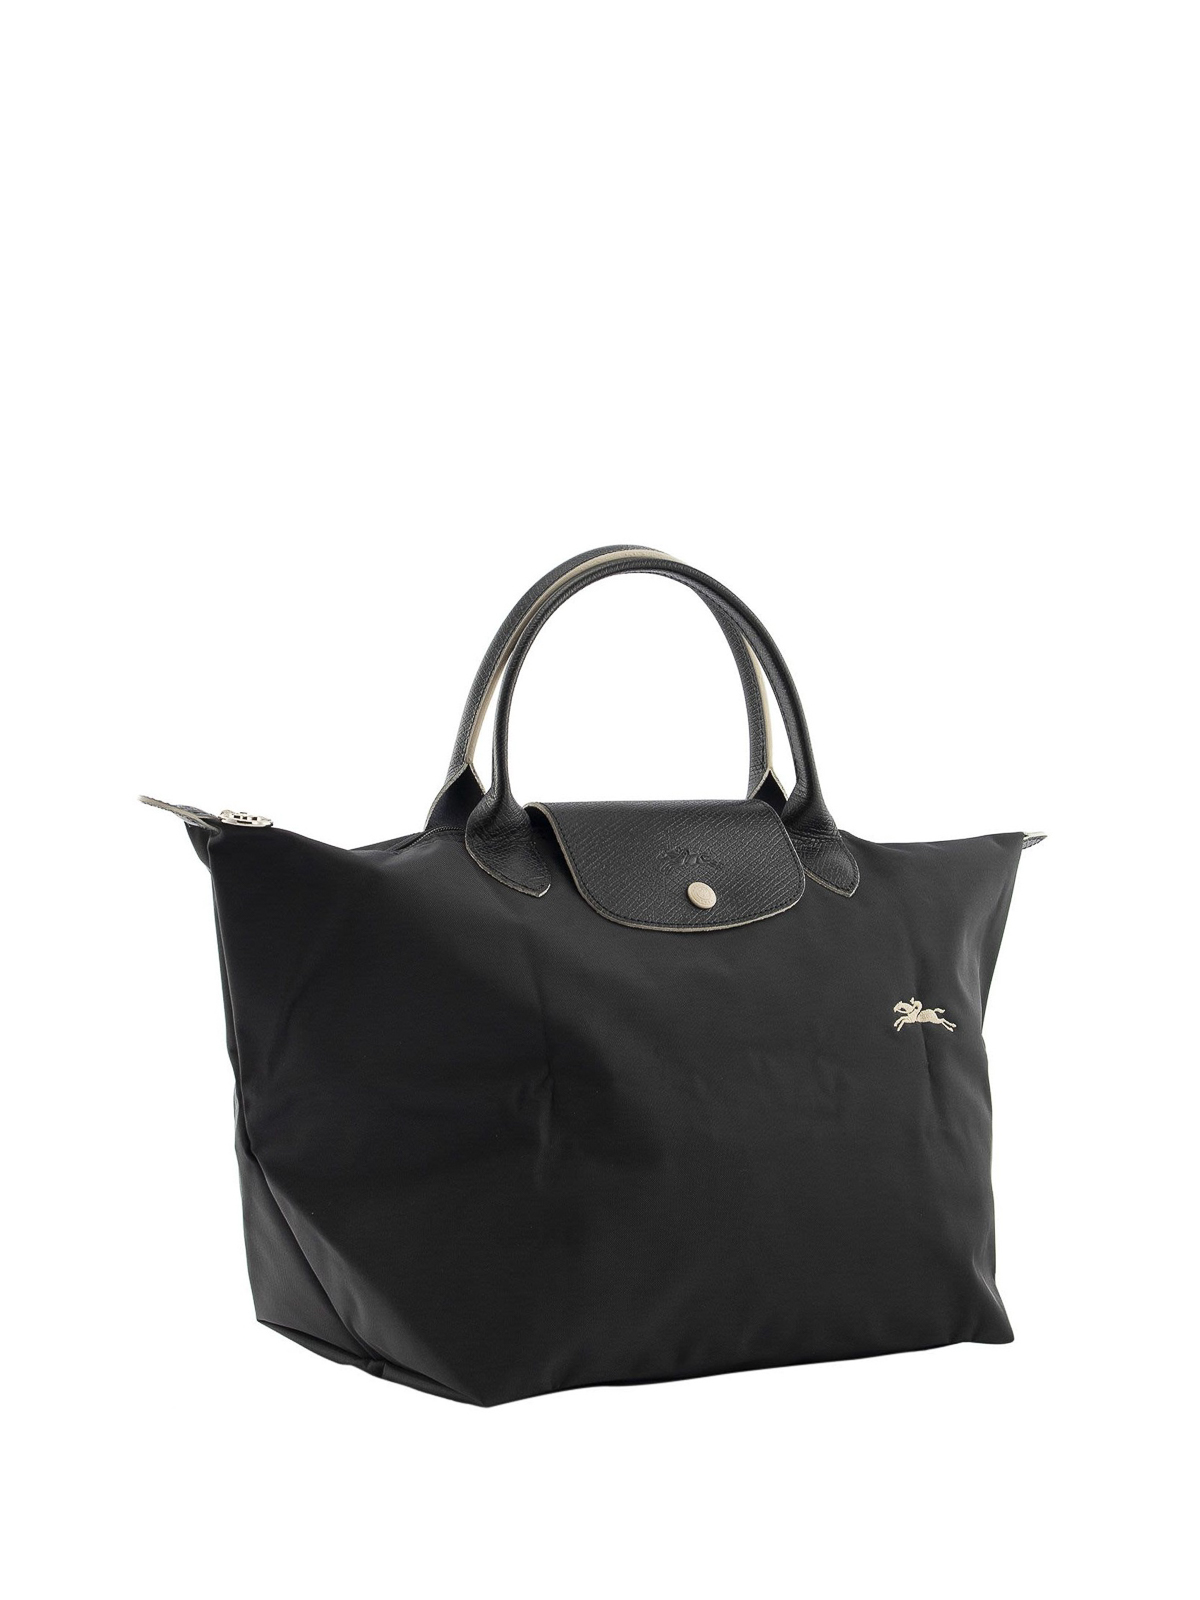 Longchamp, Bags, Long Champ Le Pliage Club Medium Top Handle Bag